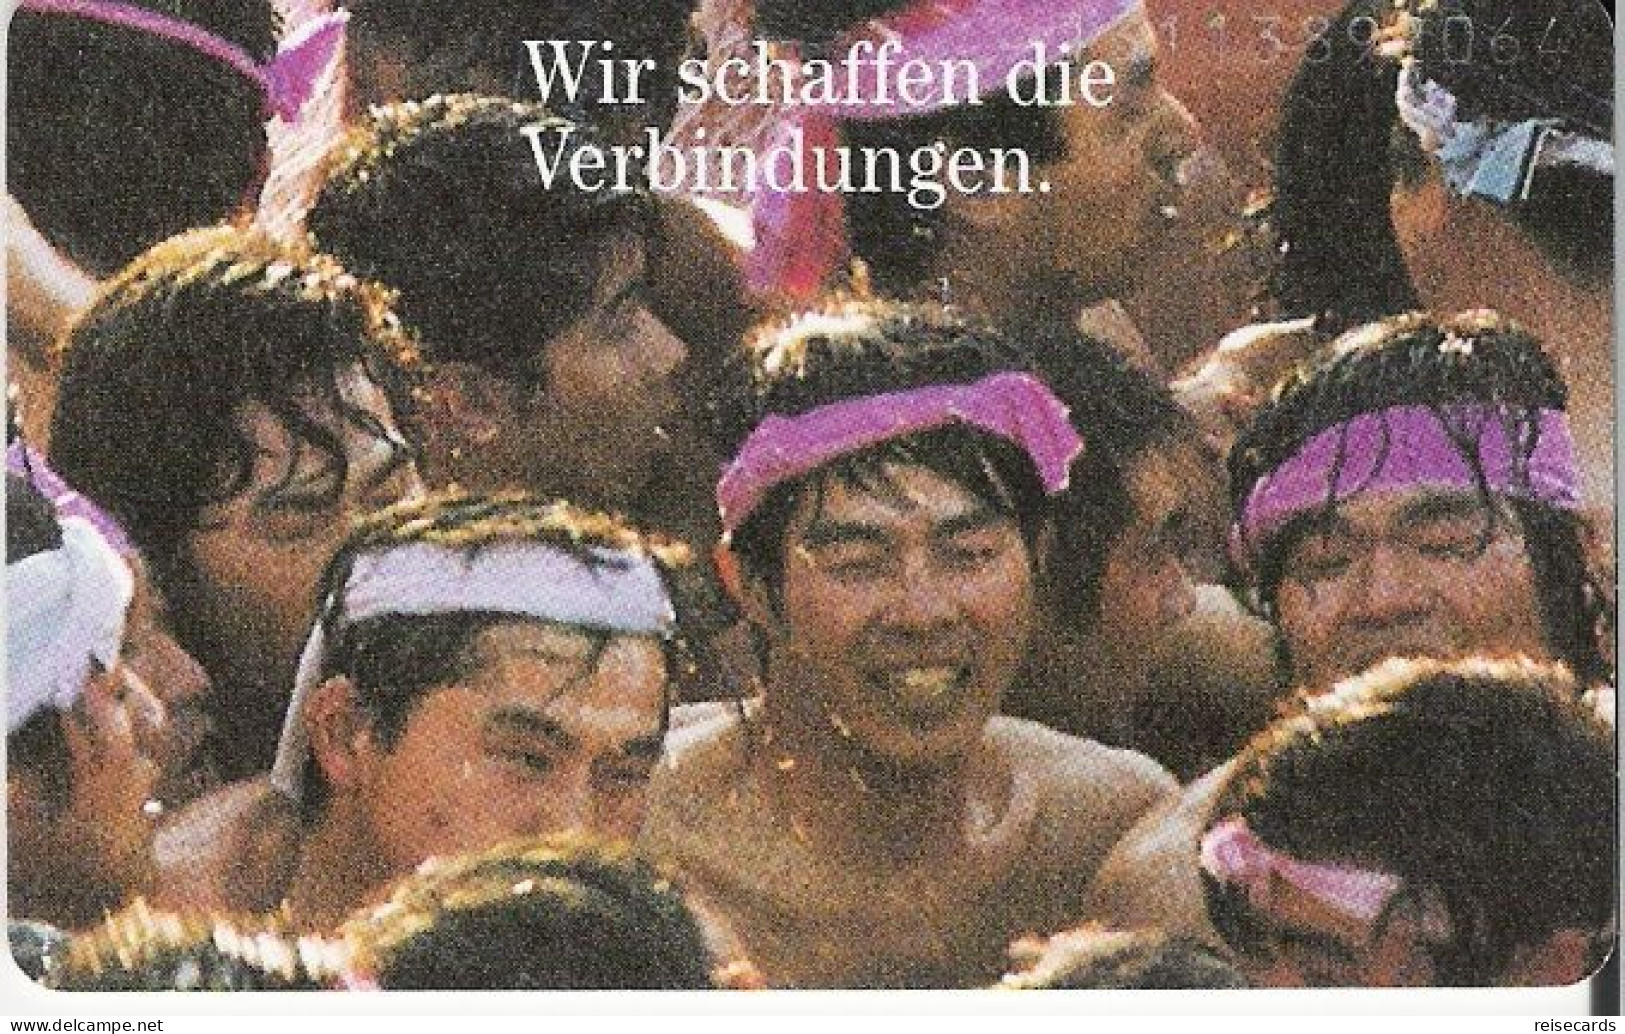 Germany: Telekom A 41 10.93 Weihnachtsedition 1993. Ichinomiya In Japan - A + AD-Series : D. Telekom AG Advertisement